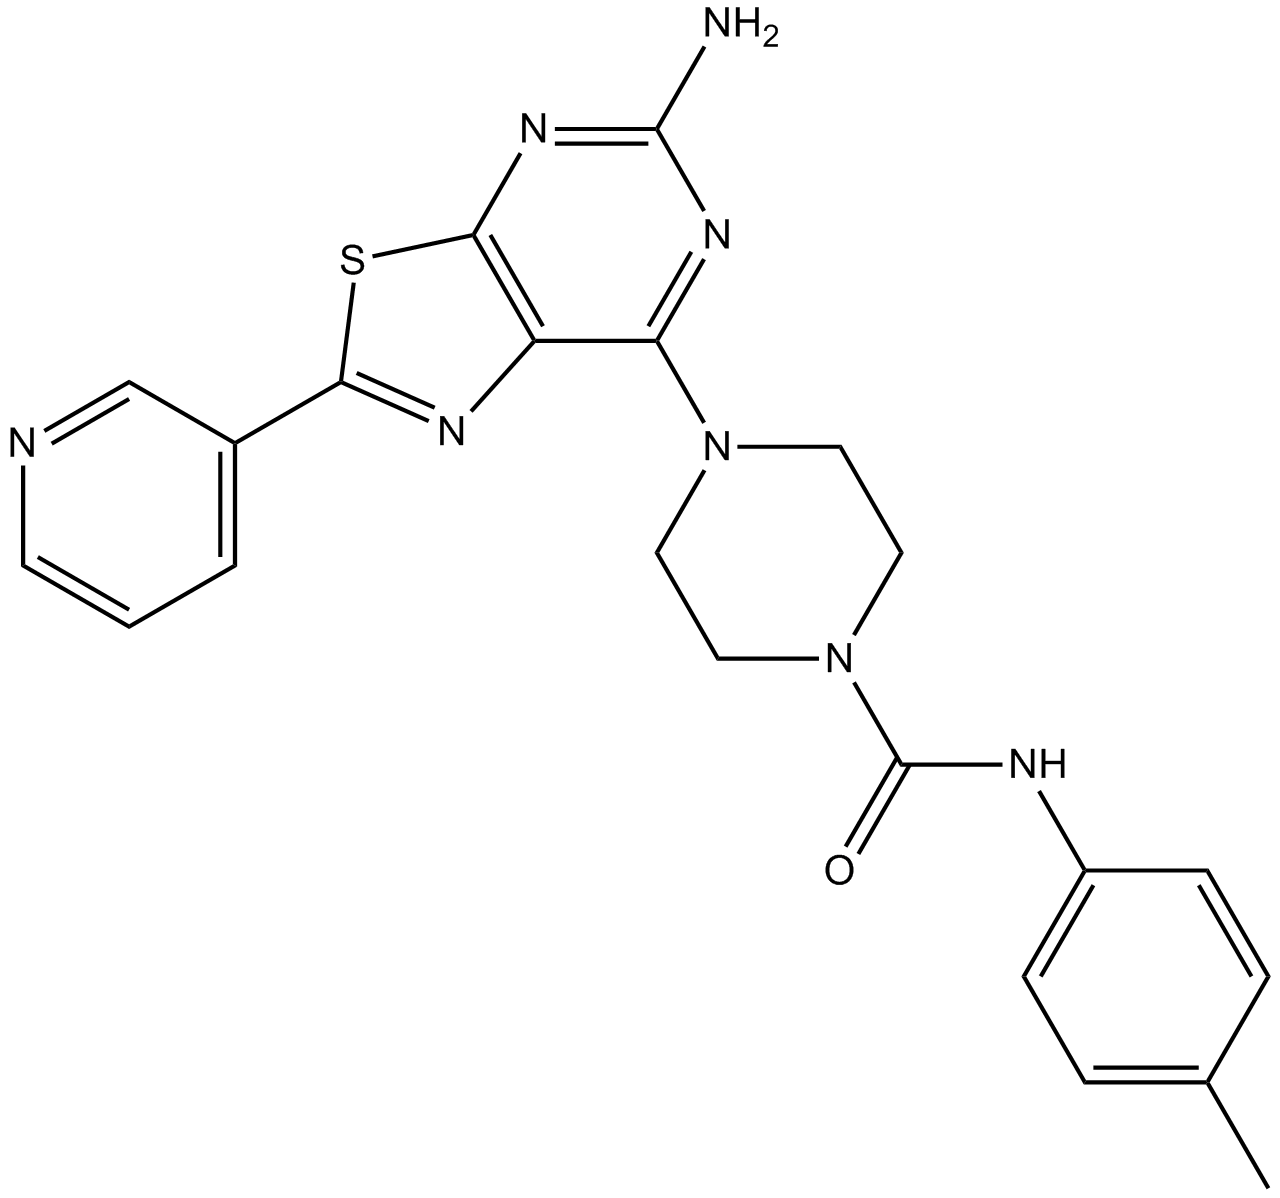 PI4KIII beta inhibitor 3 化学構造